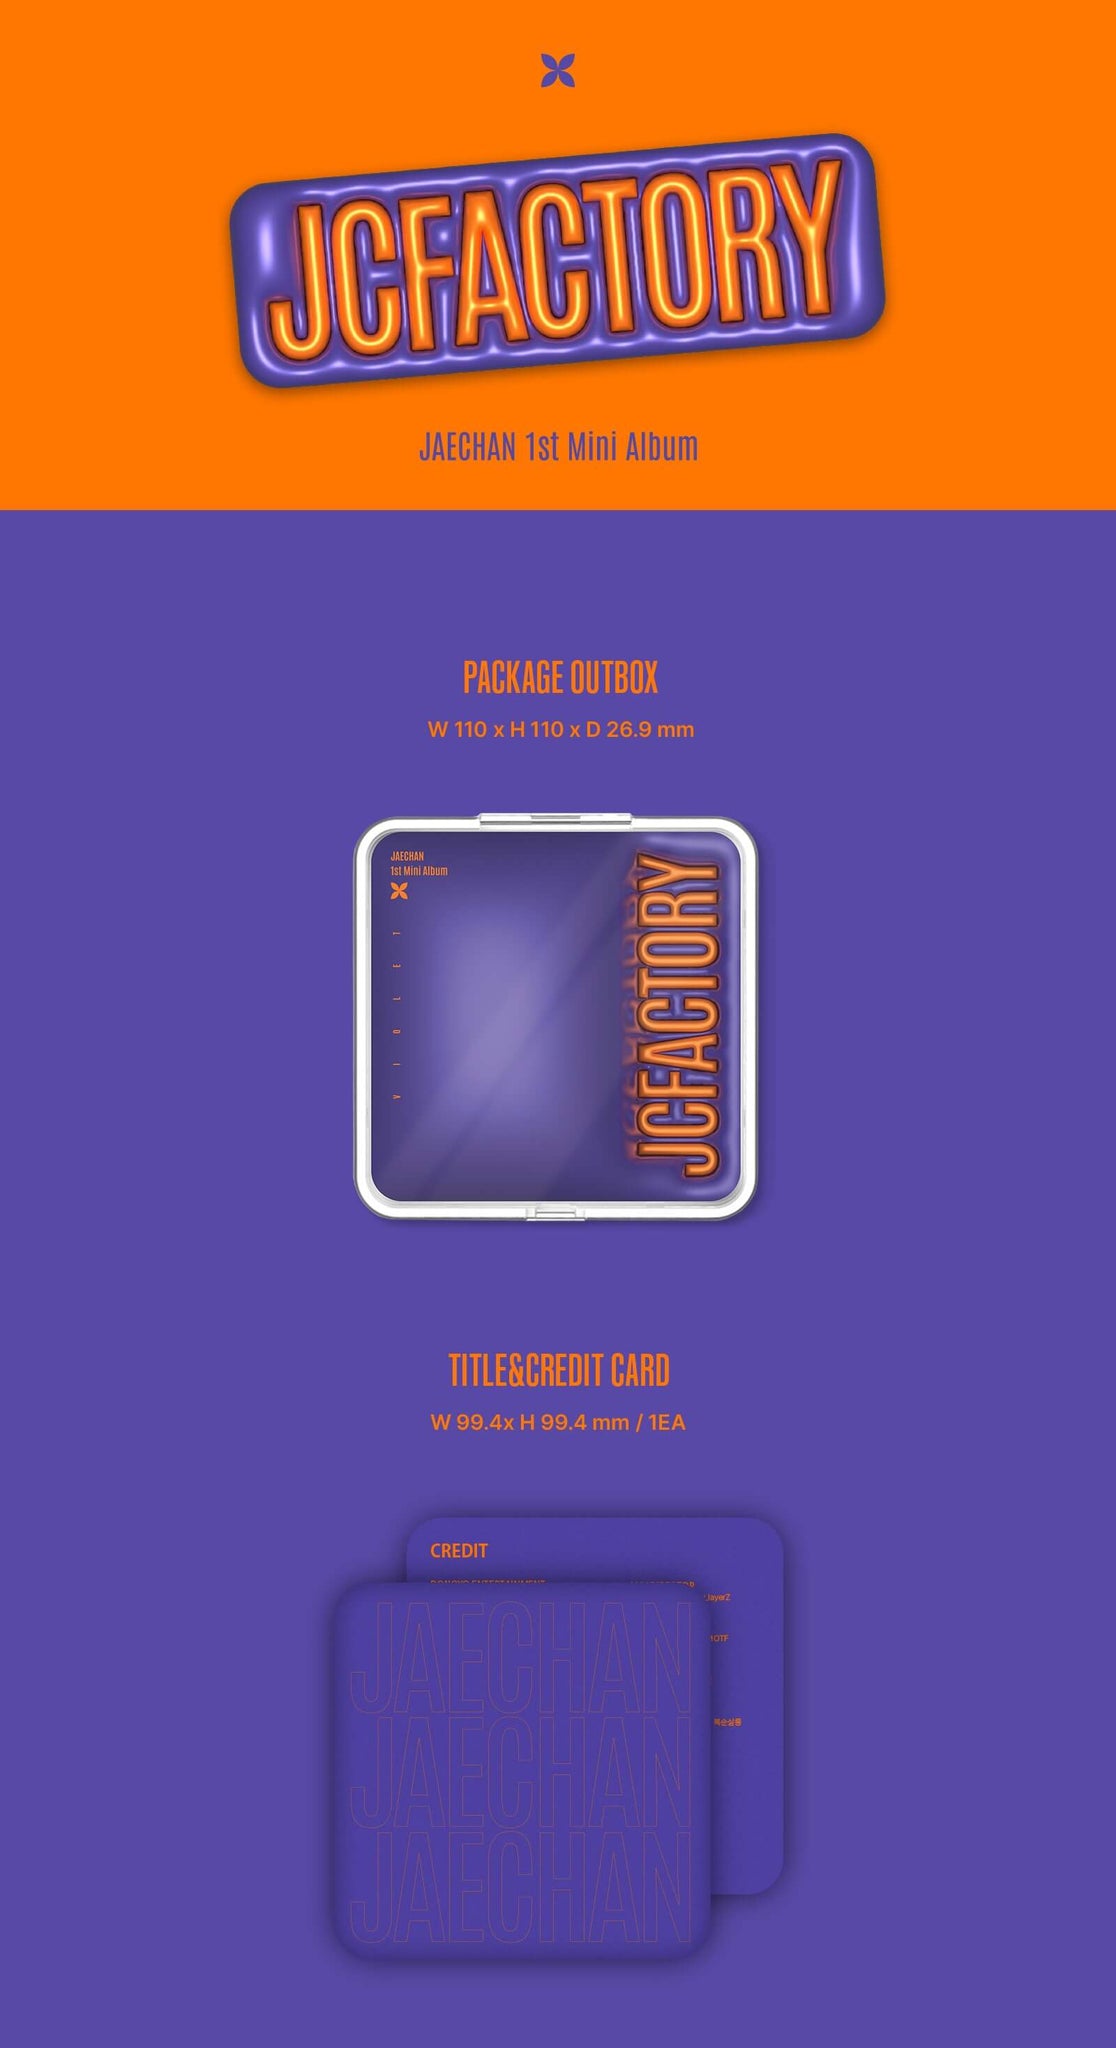 Jaechan 1st Mini Album JCFACTORY Kit Version Inclusions Package Box Title & Credit Card